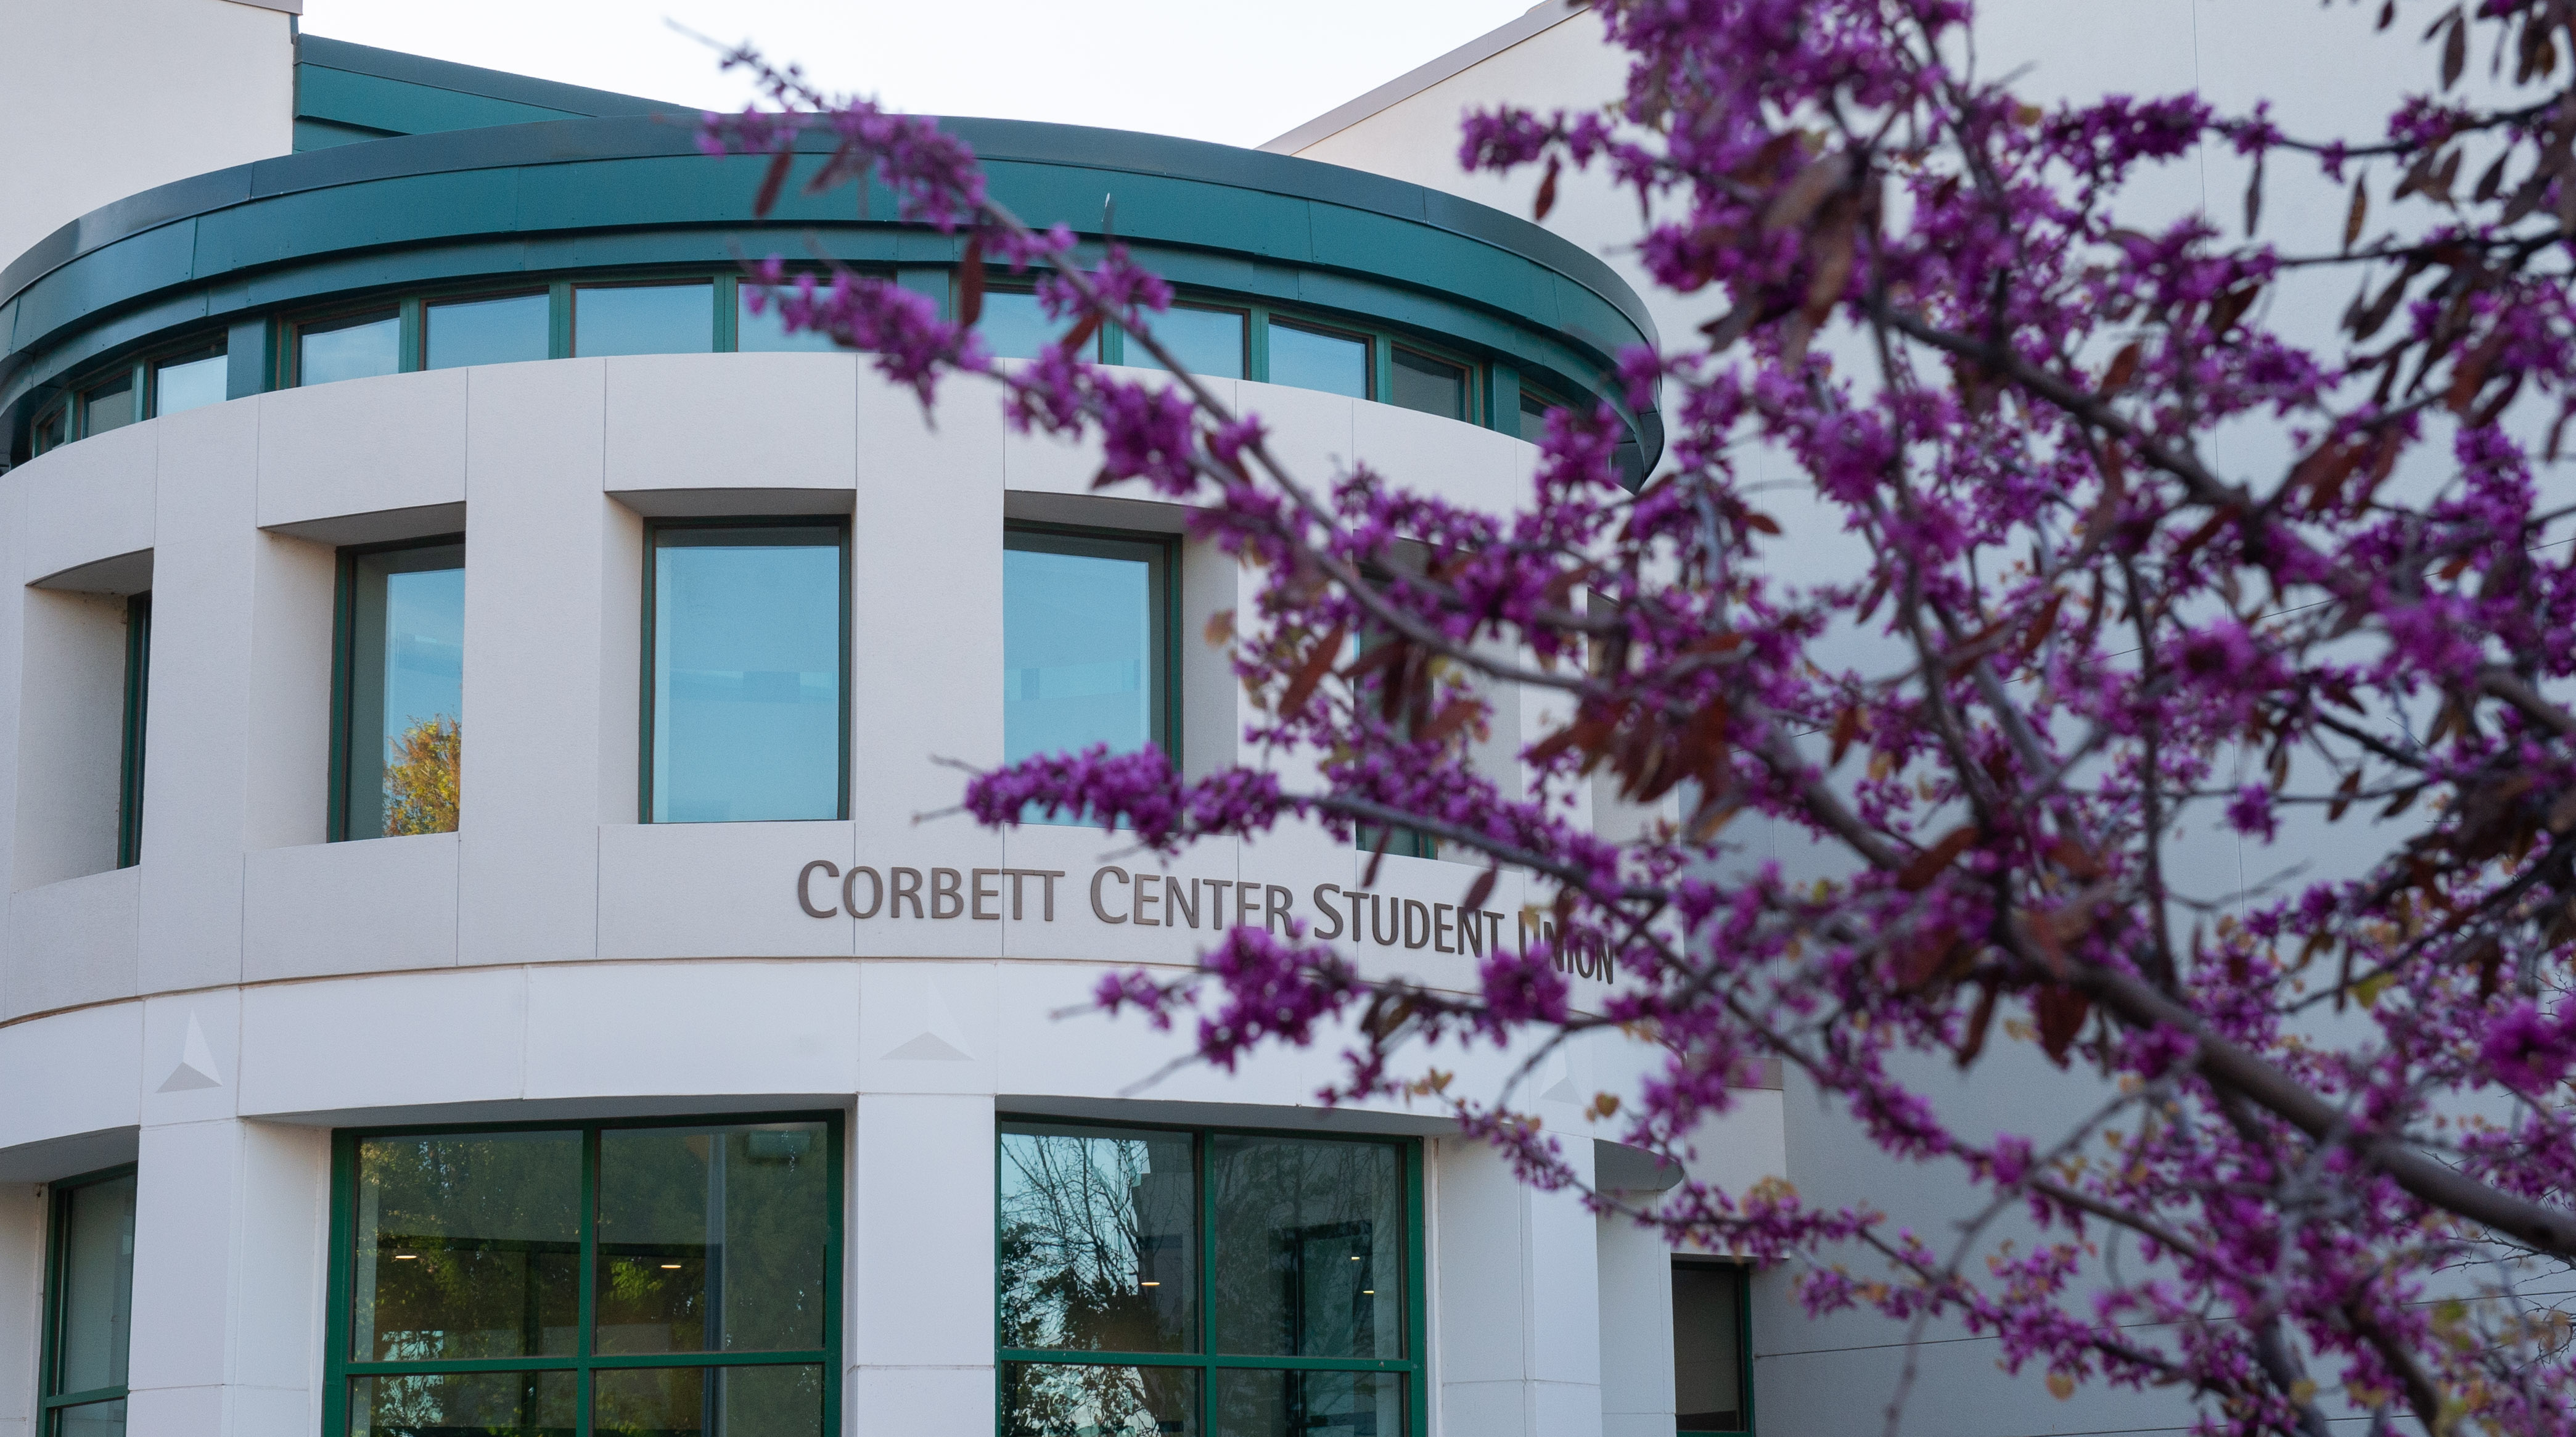 Corbett Center